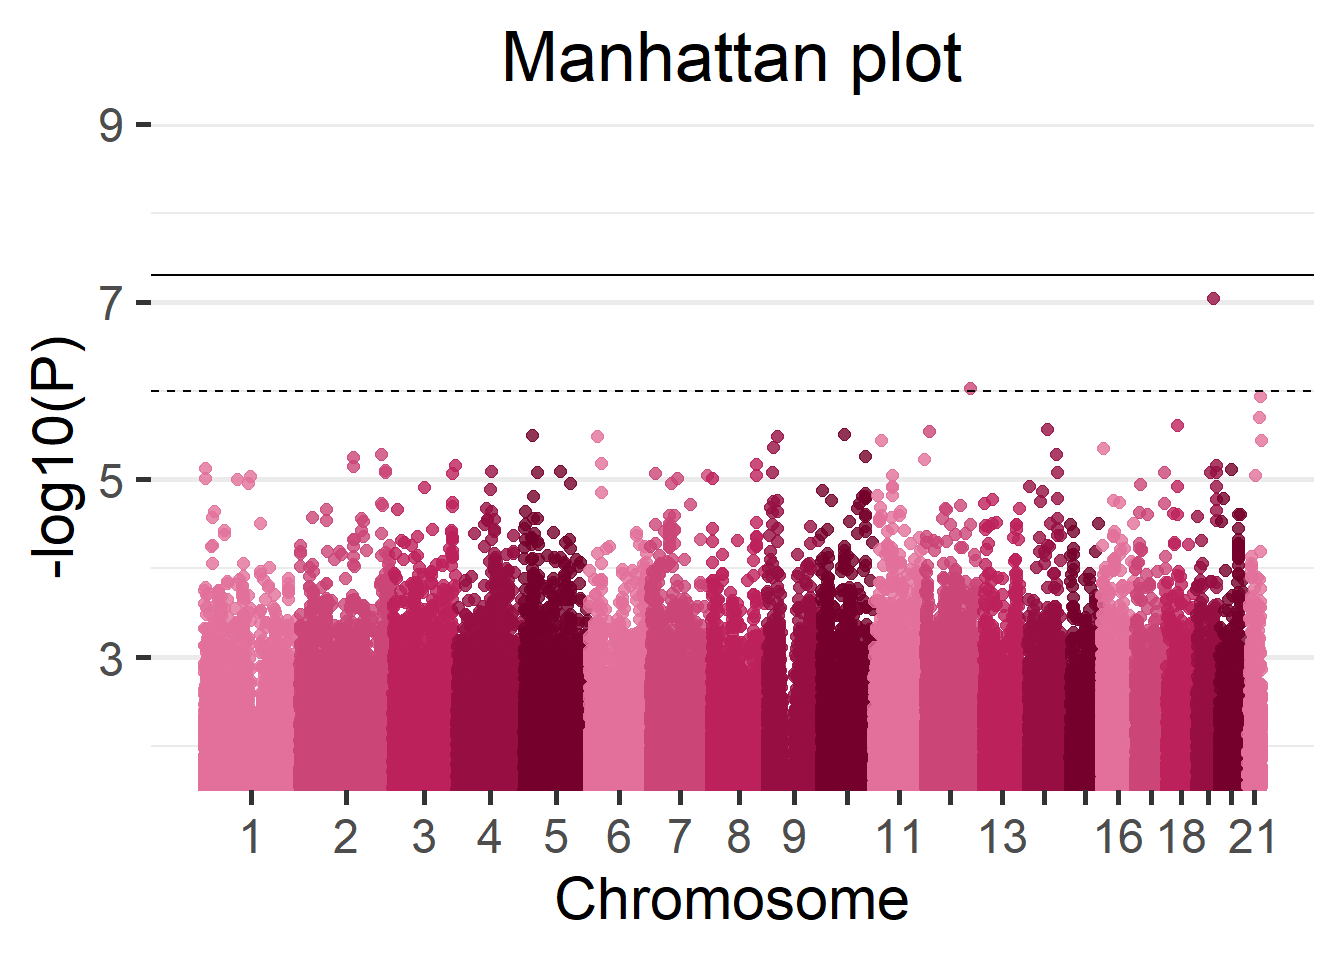 Manhattan plot of the single-cohort results.